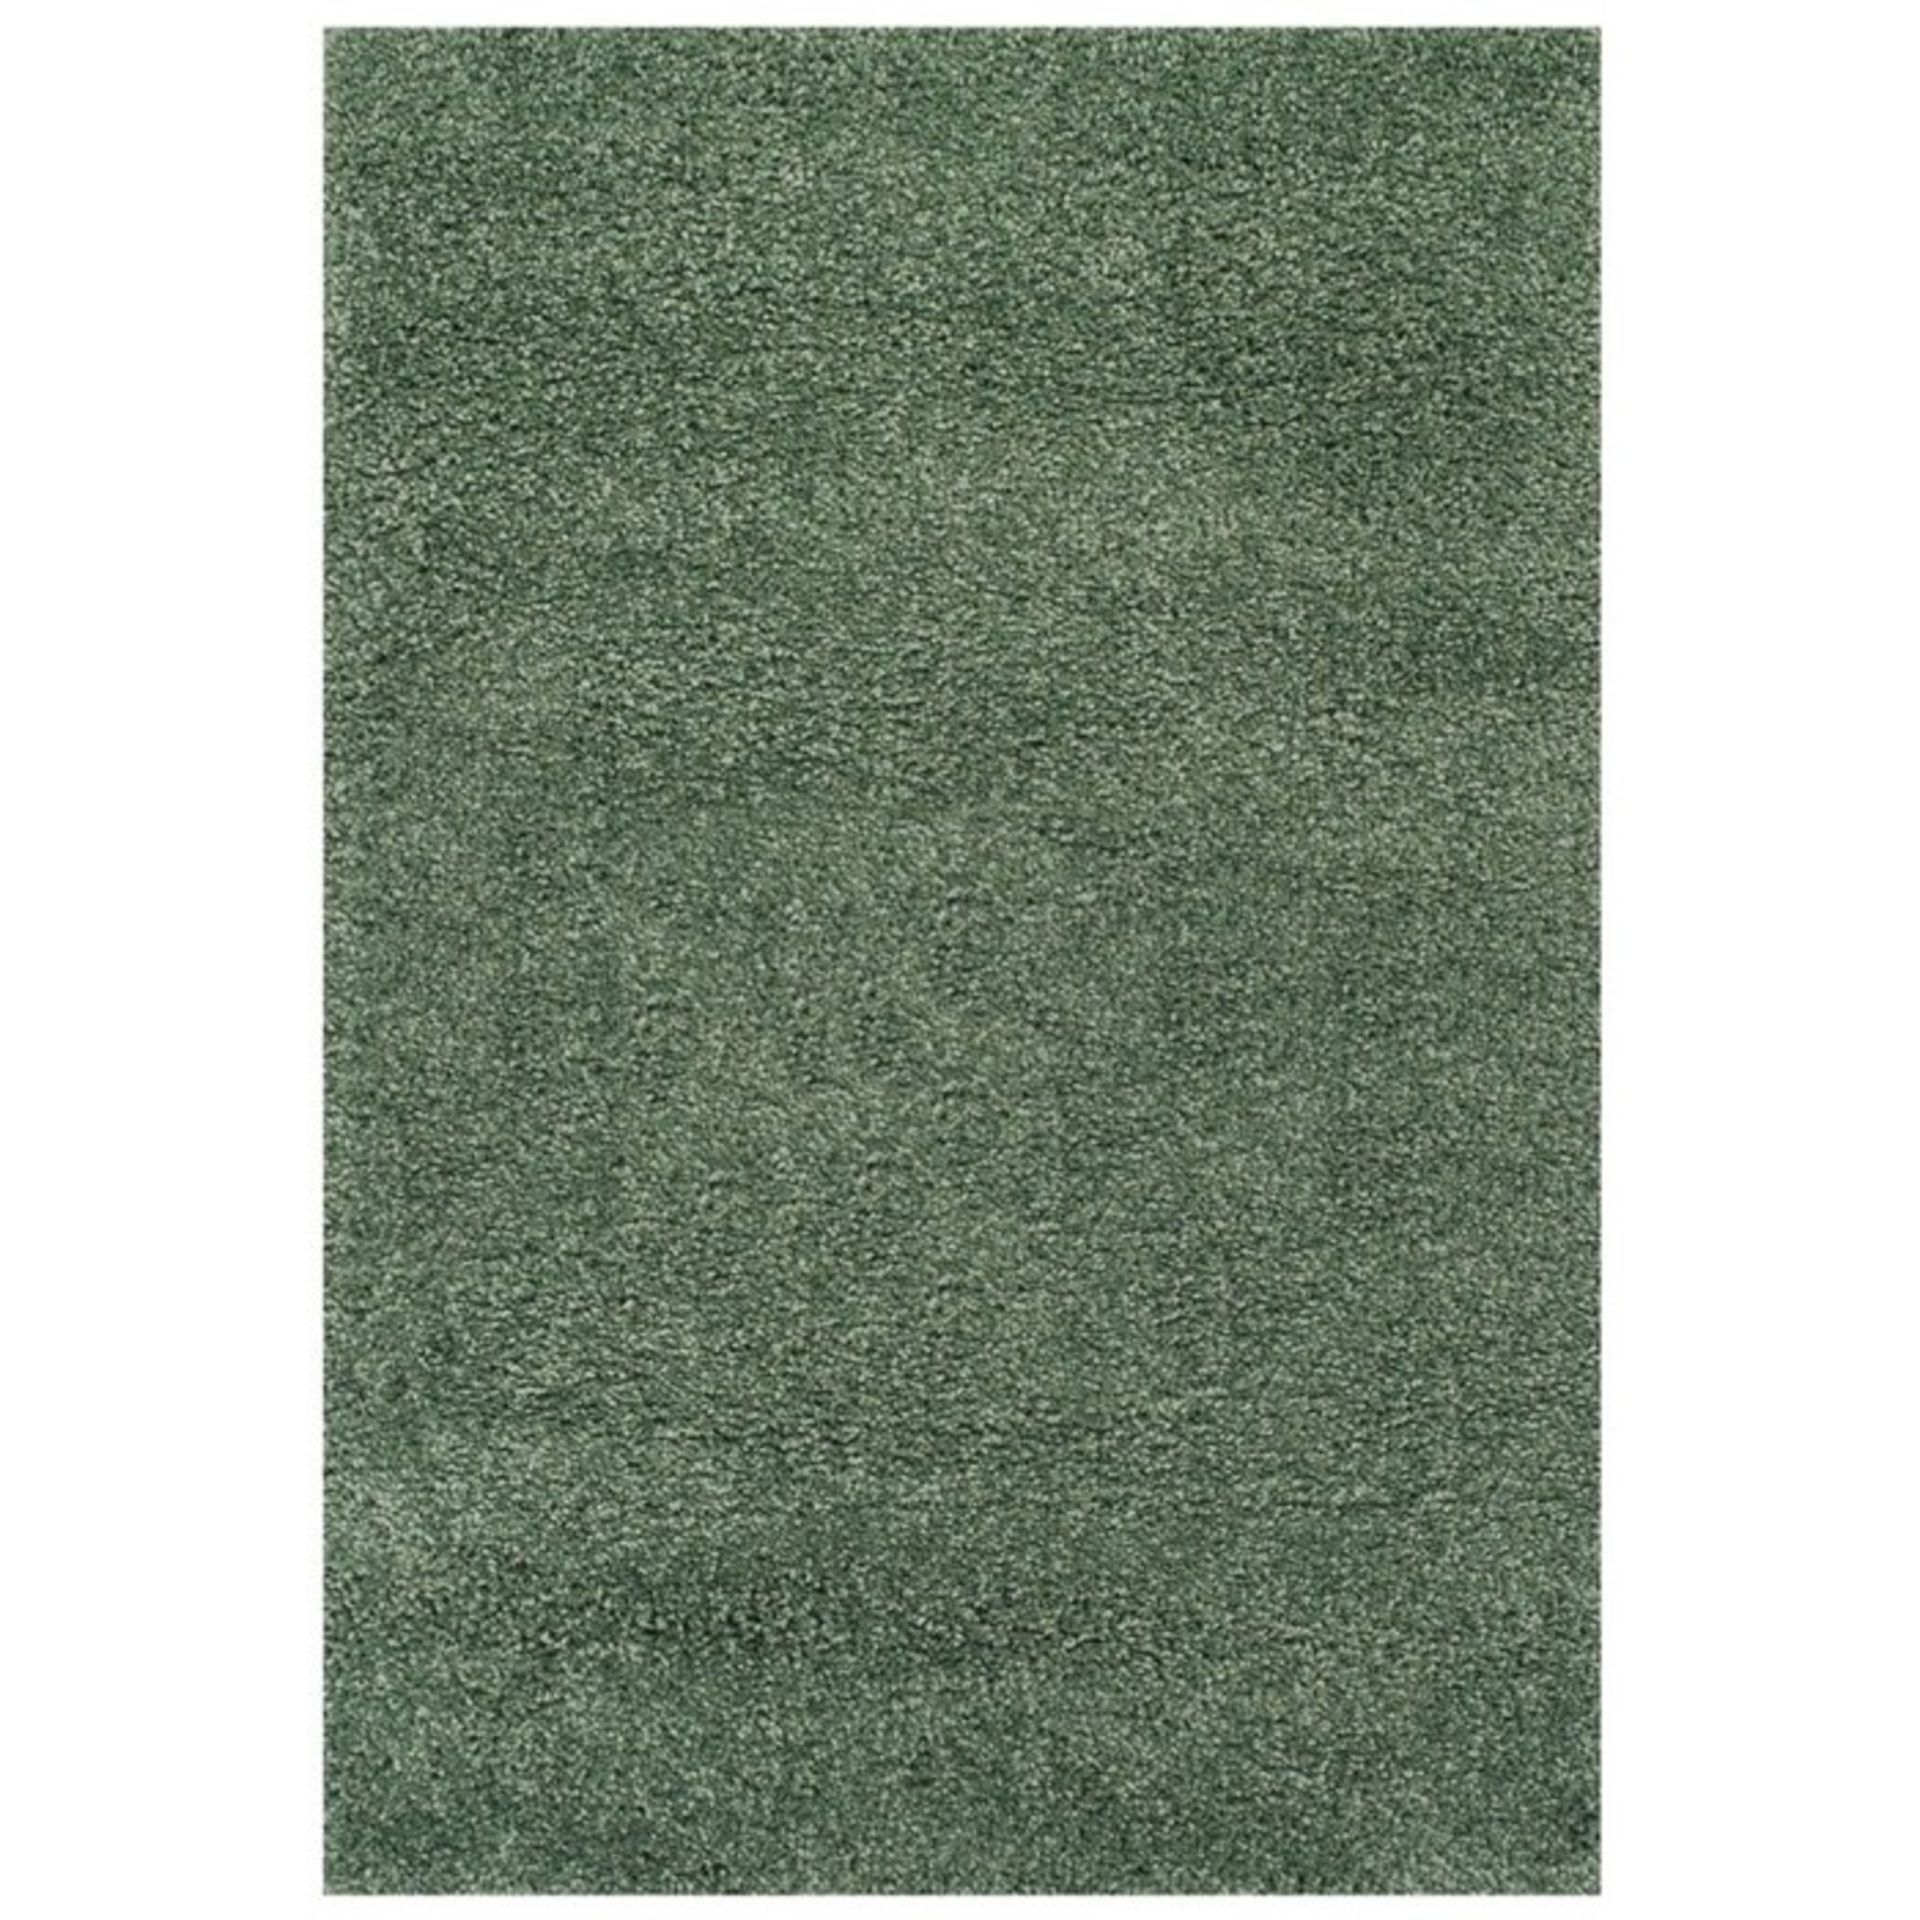 17 Stories,Keriann Sage Green Rug Rug Size: Rectangle 160 x 230cm RRP£86.99(H17228 - 1/17 LOWV1953.